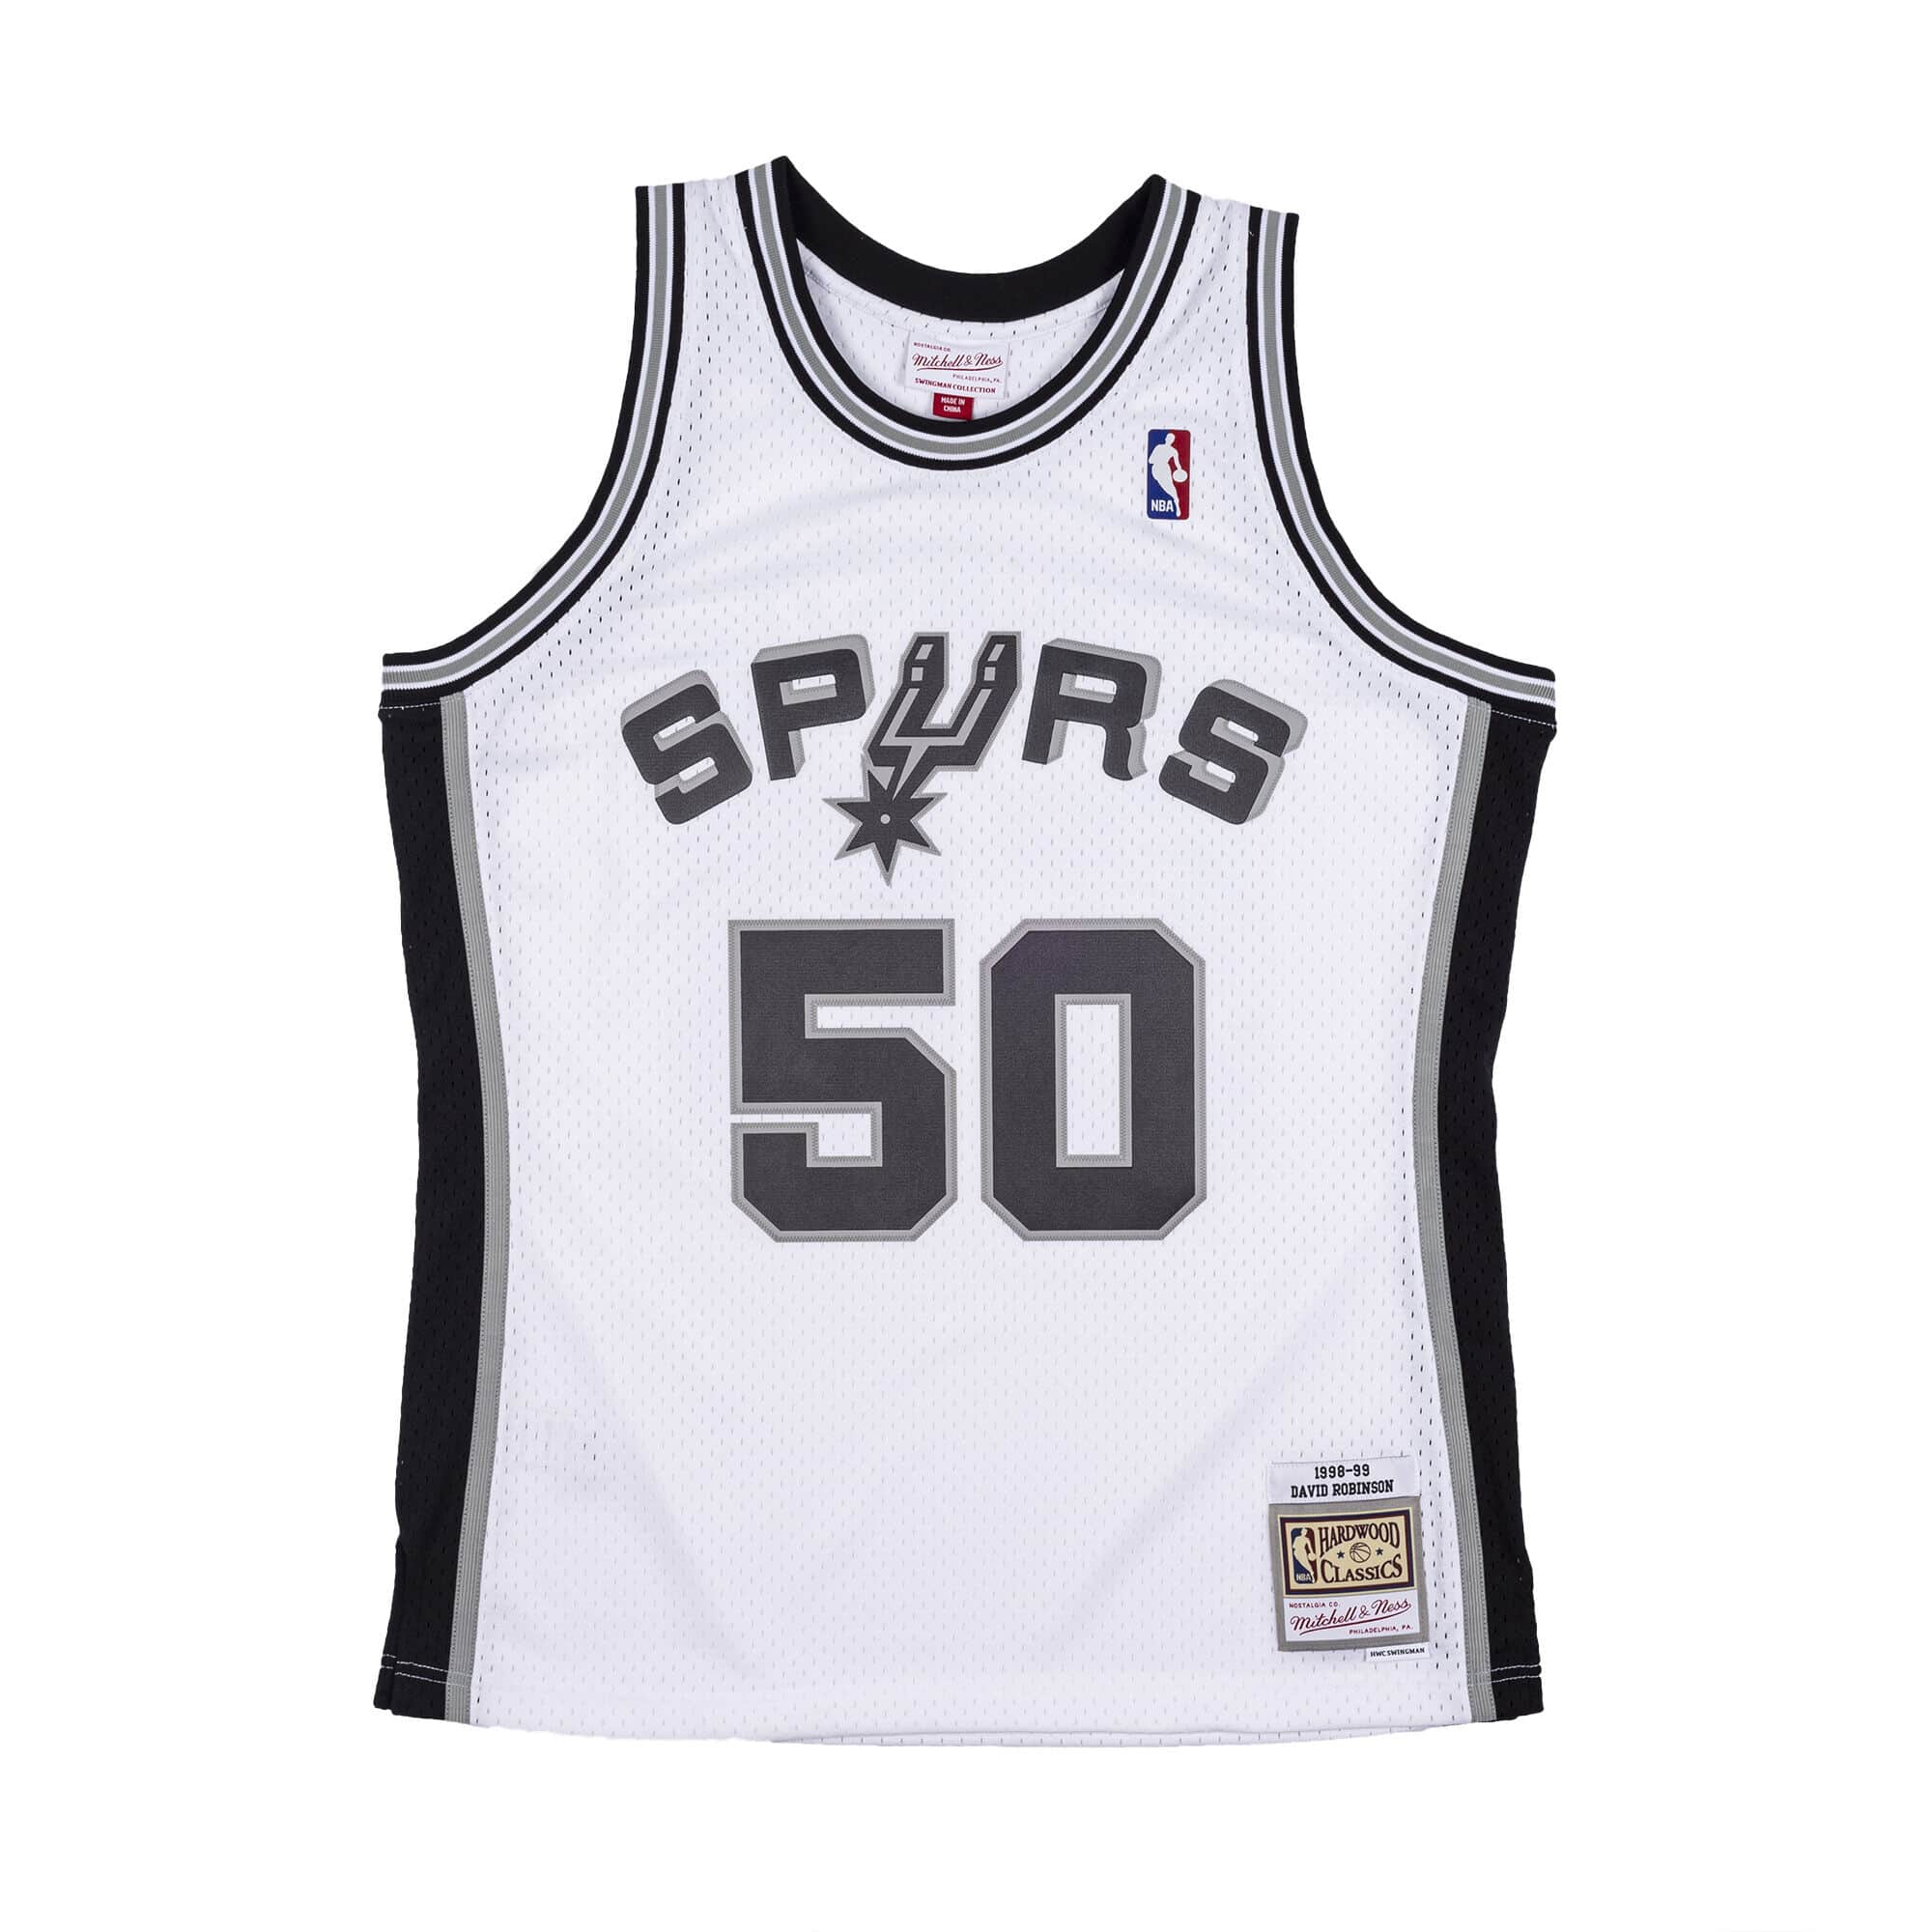 San Antonio Spurs Jerseys & Gear.